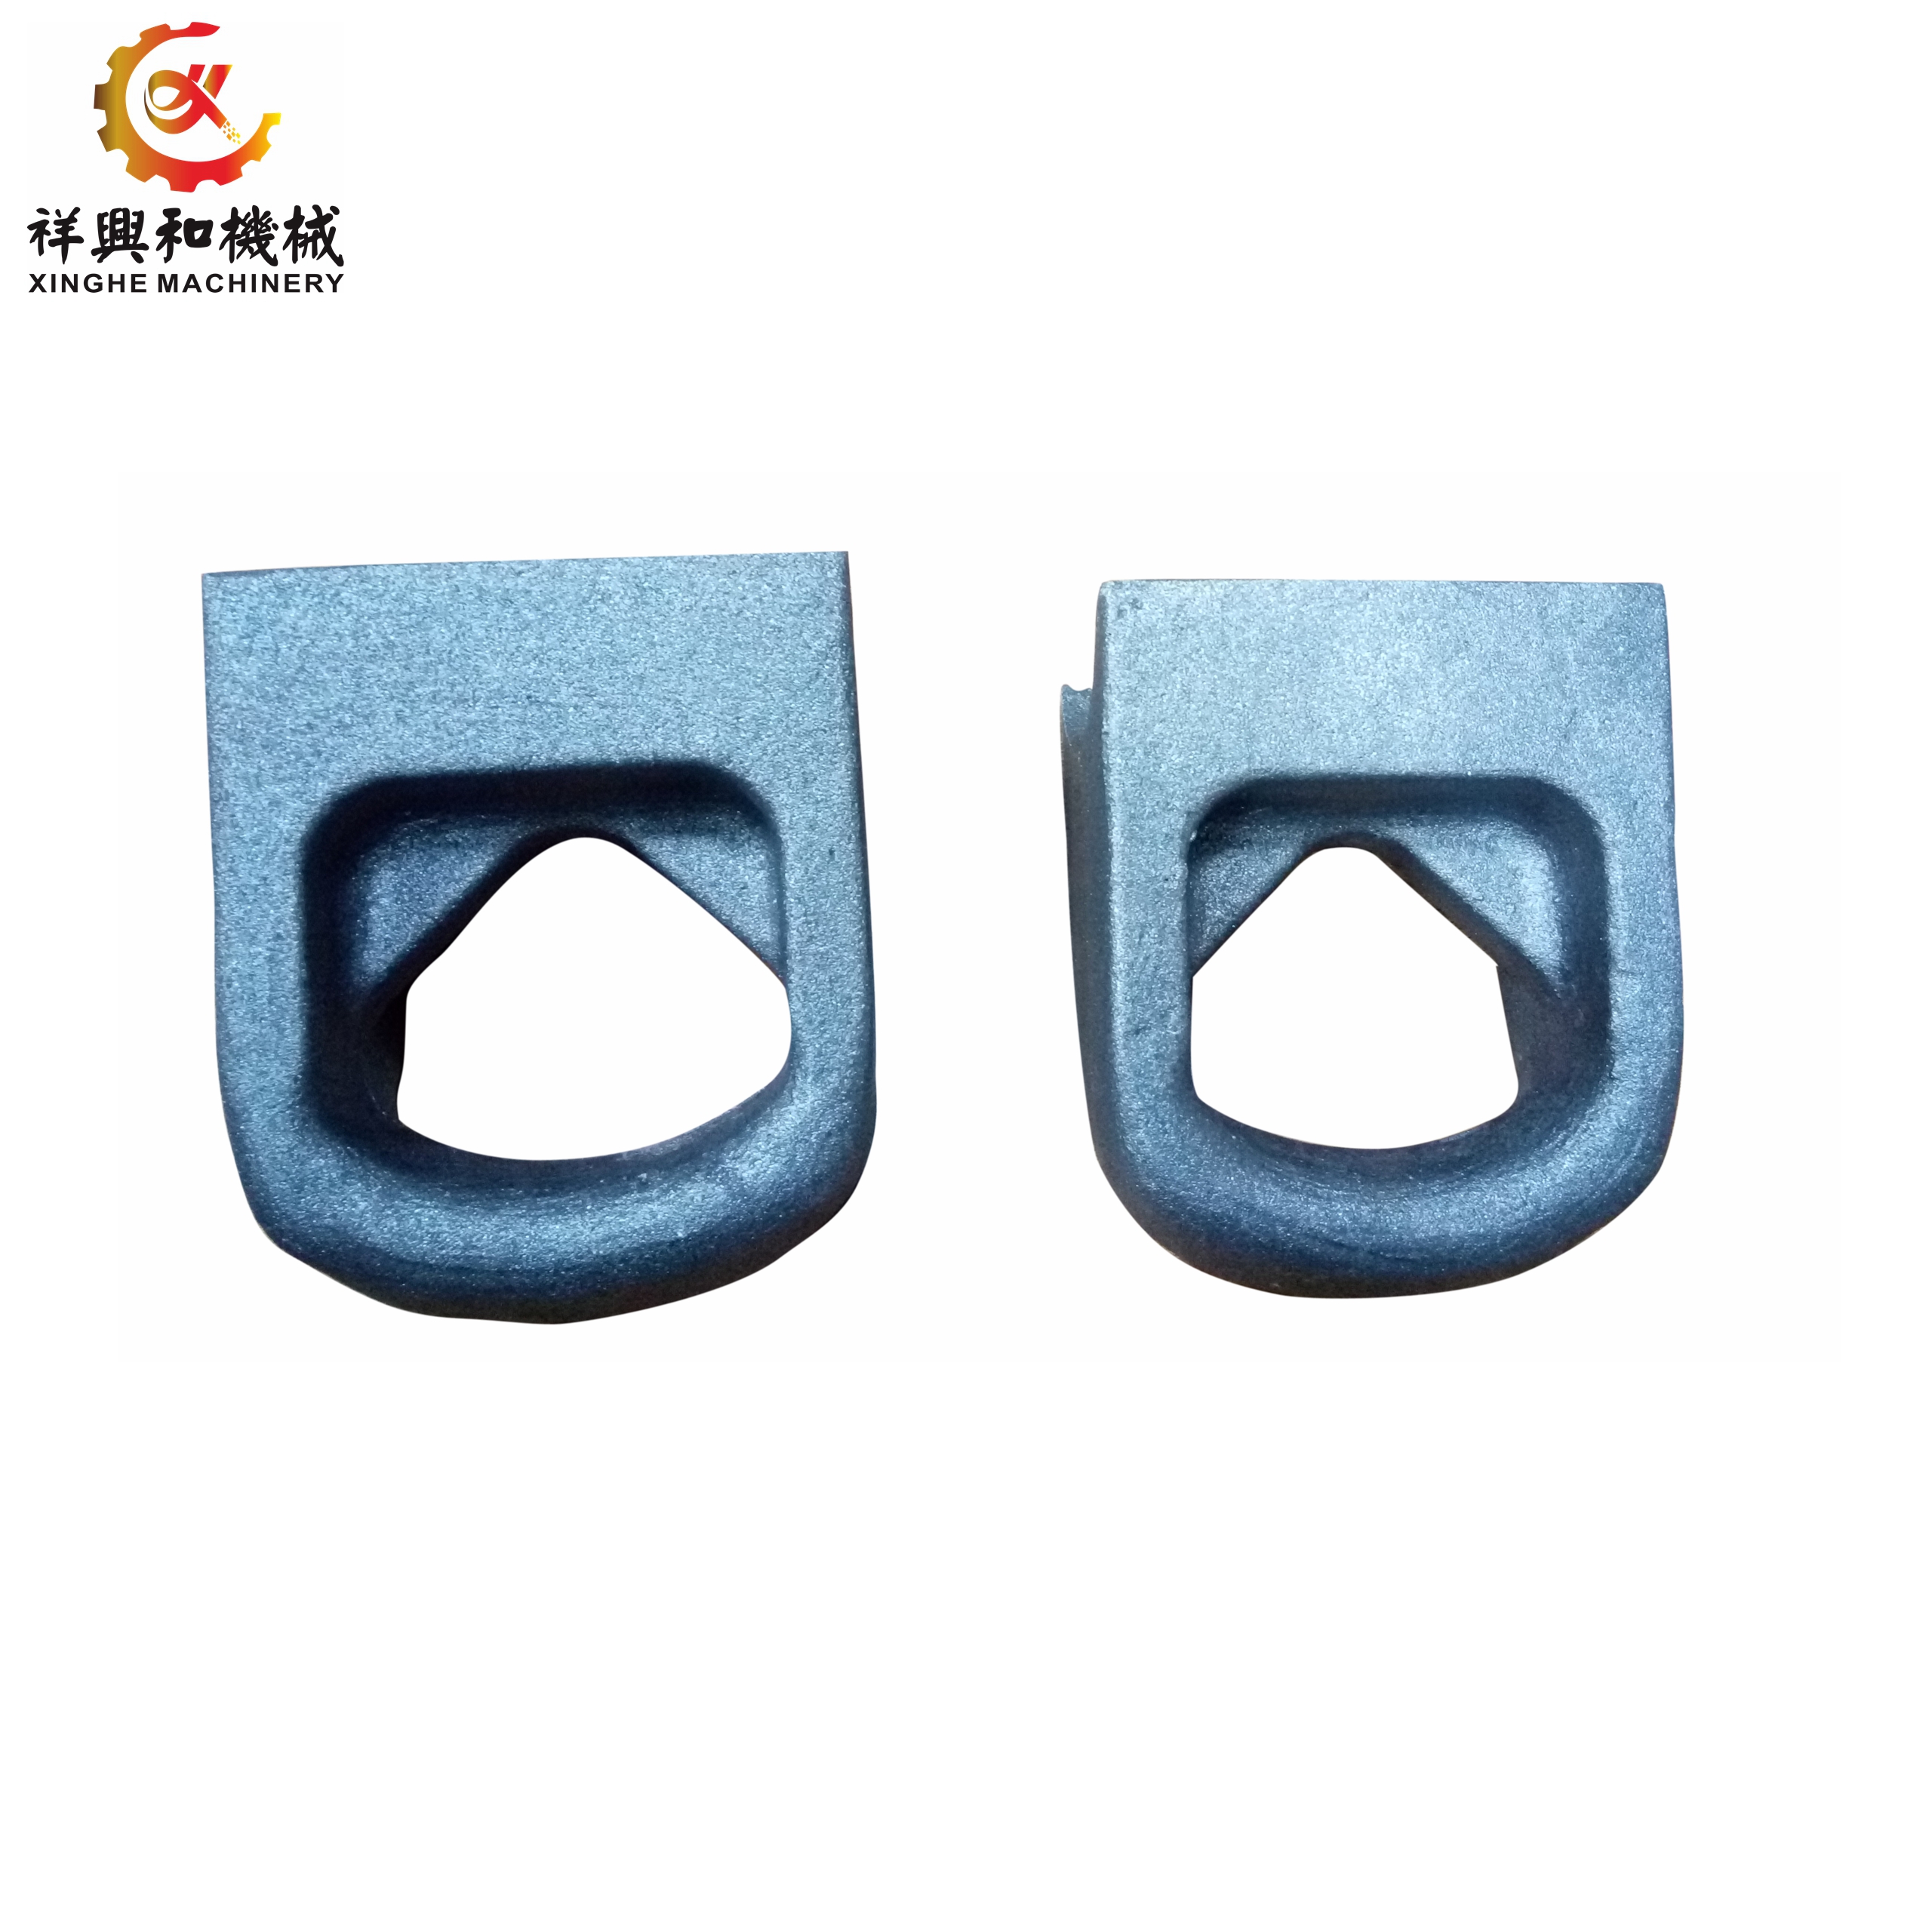 China foundry custom grey cast iron parts manufacturers automotive